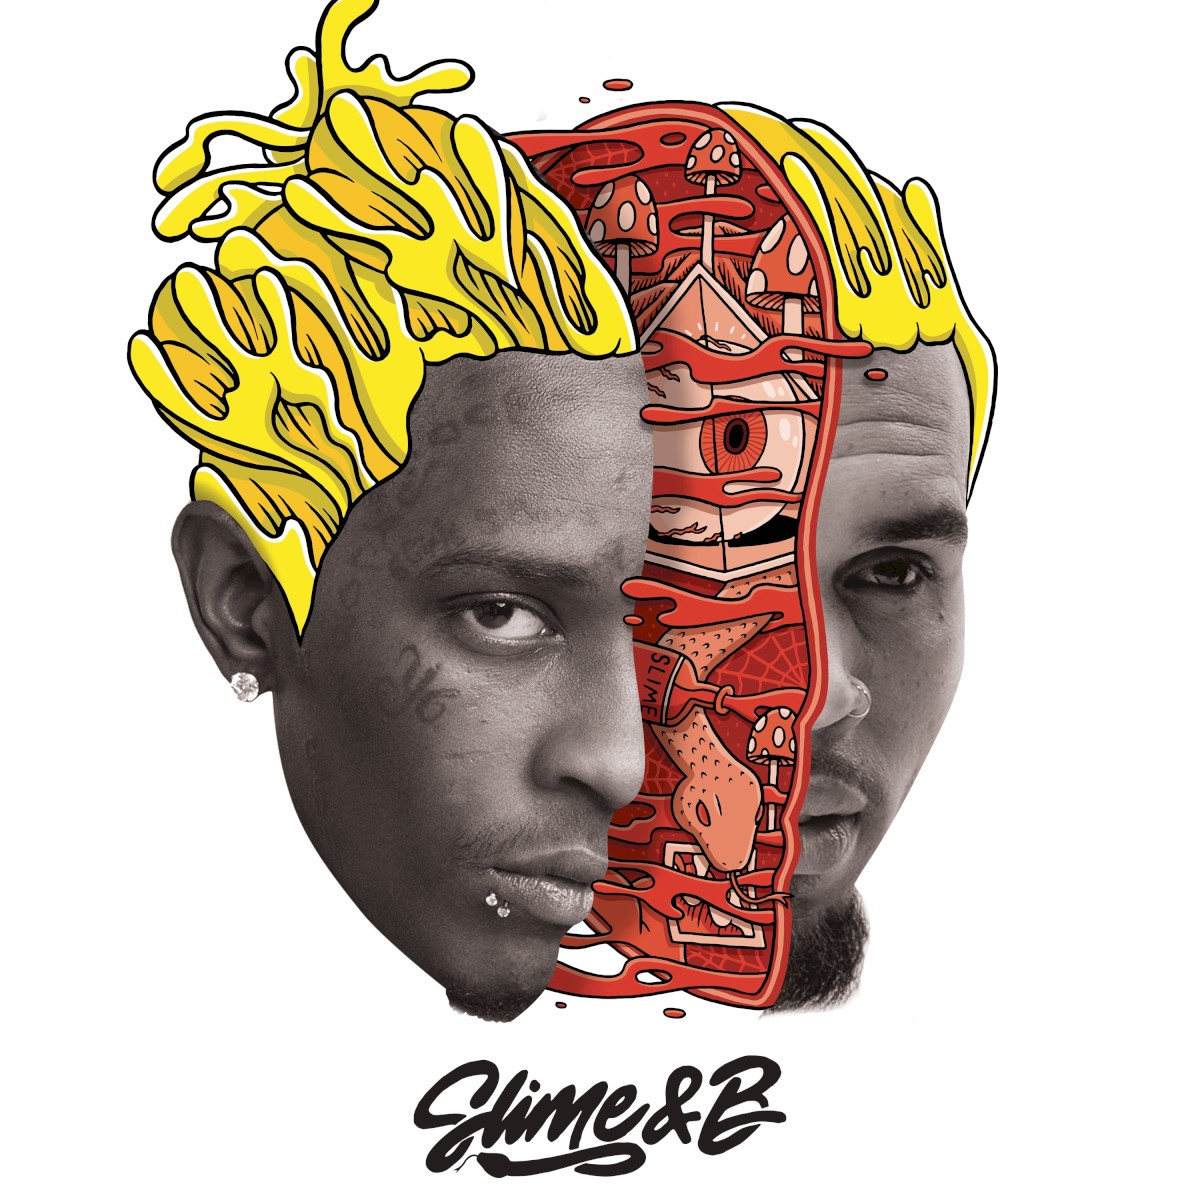 Chris Brown & Young Thug Go Crazy cover artwork